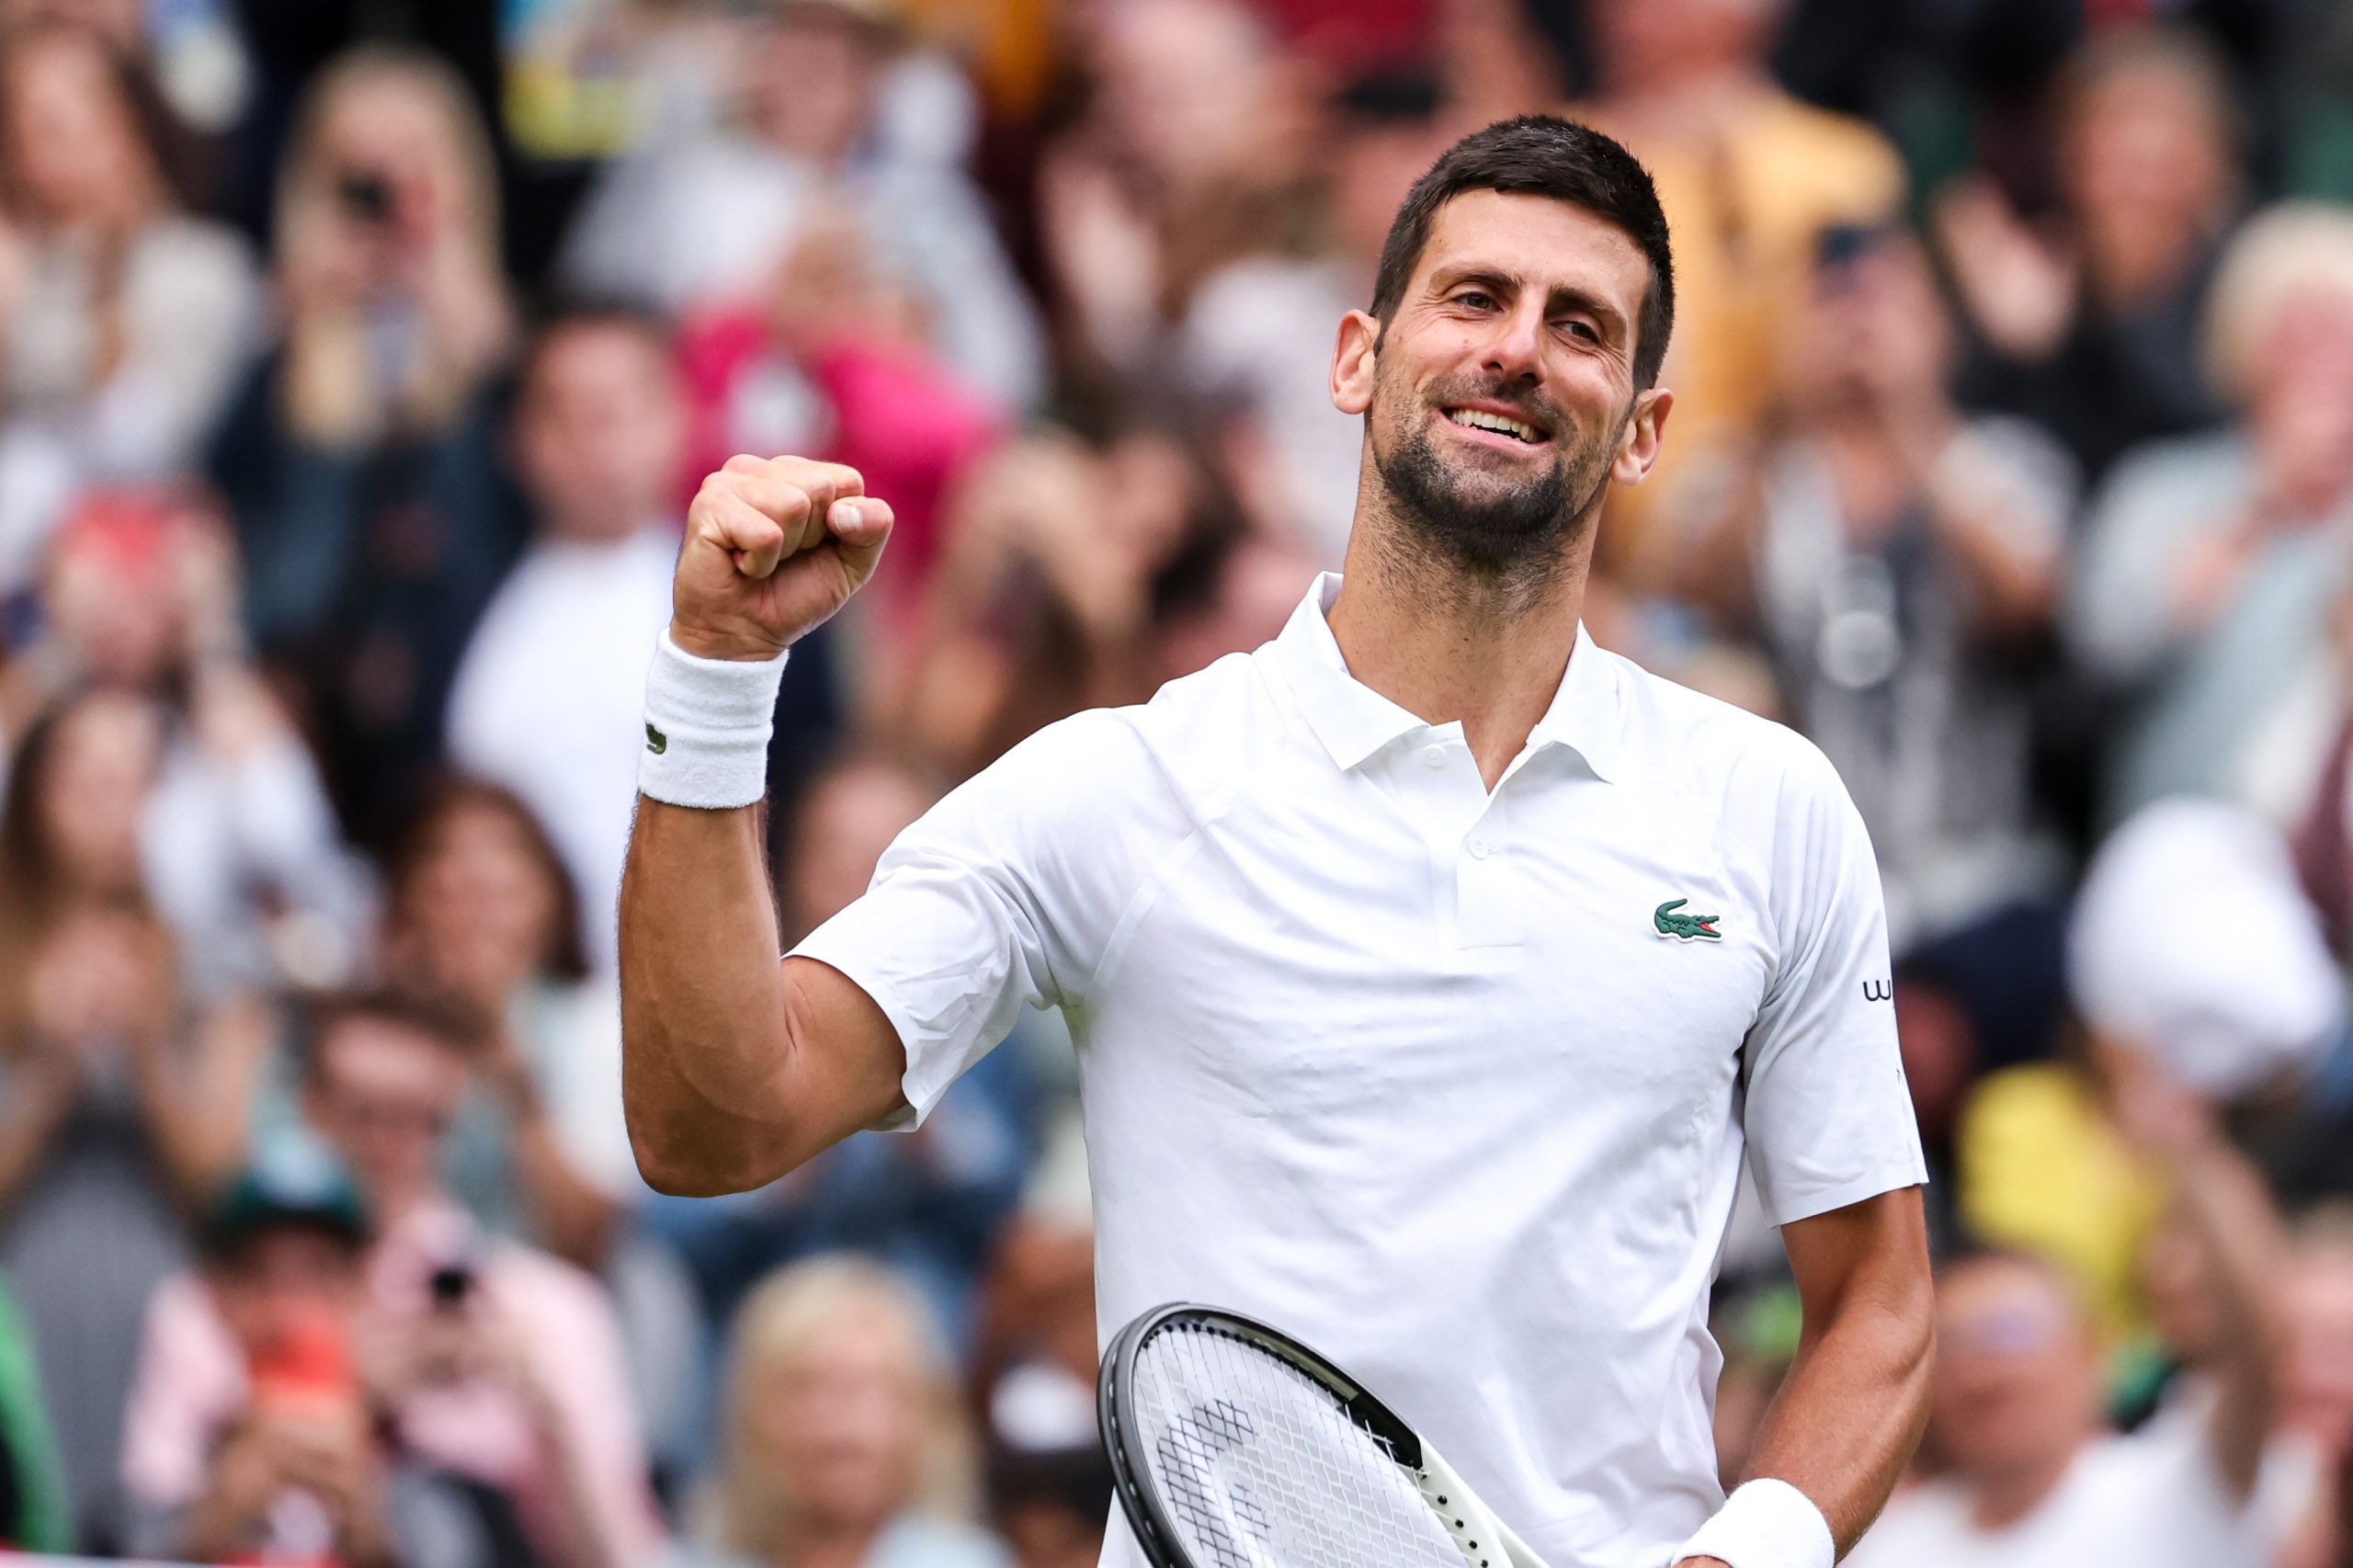 Novak Djokovic Faces Criticism for Mimicking Ben Shelton's Celebration From Shelton’s Father